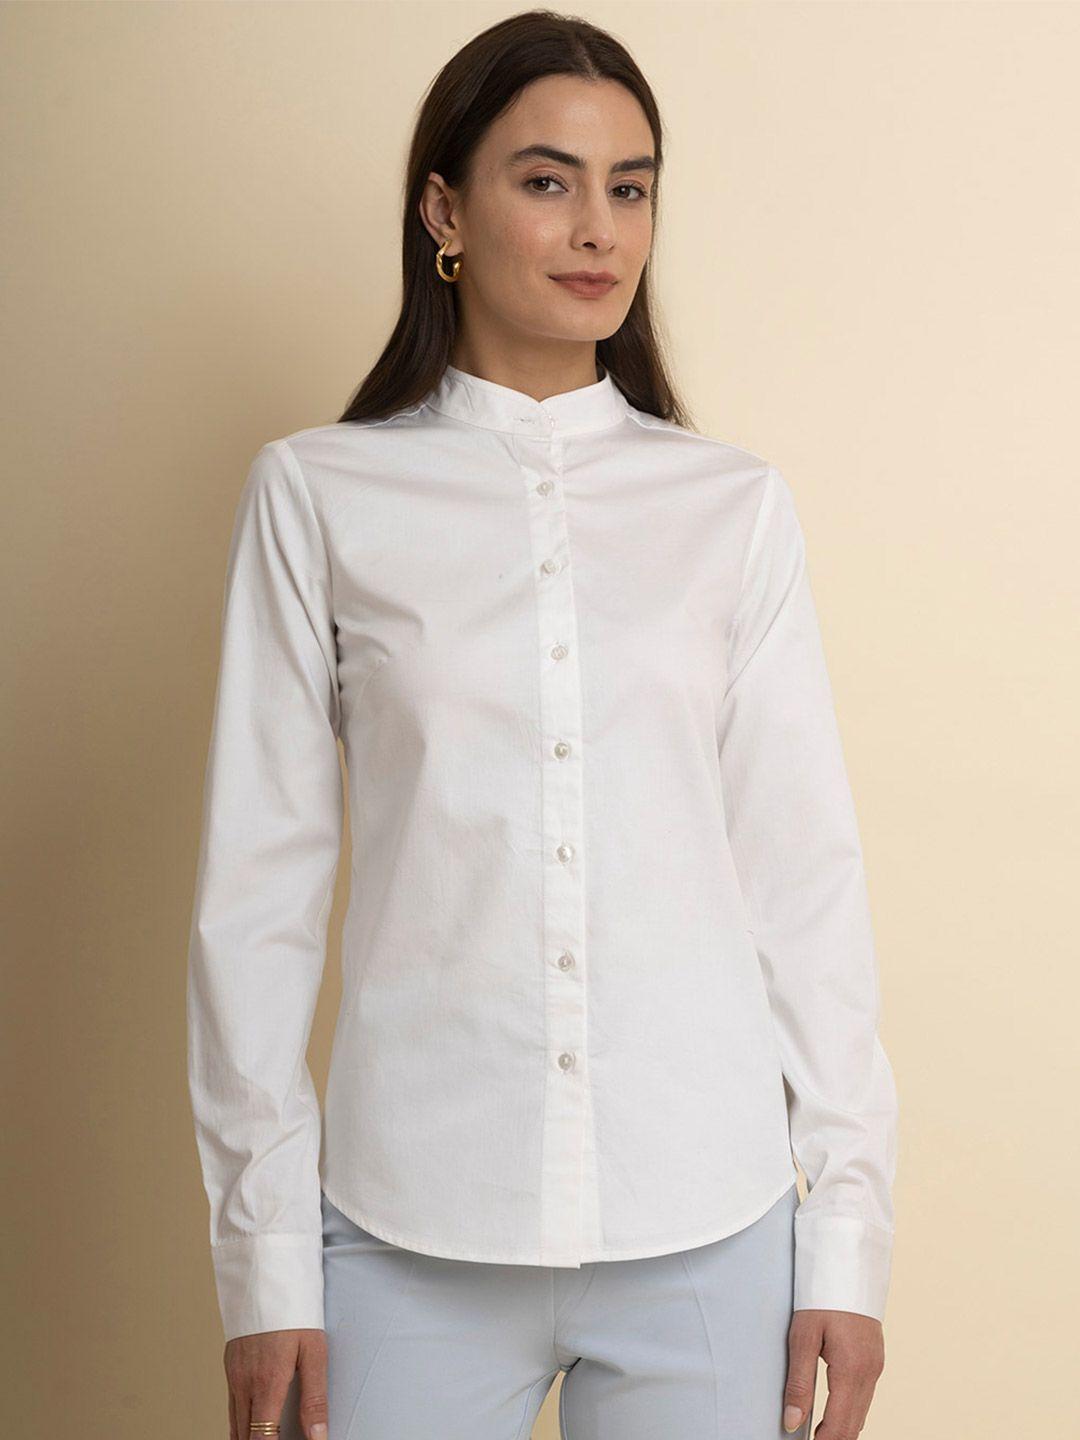 fablestreet mandarin collar cotton casual shirt